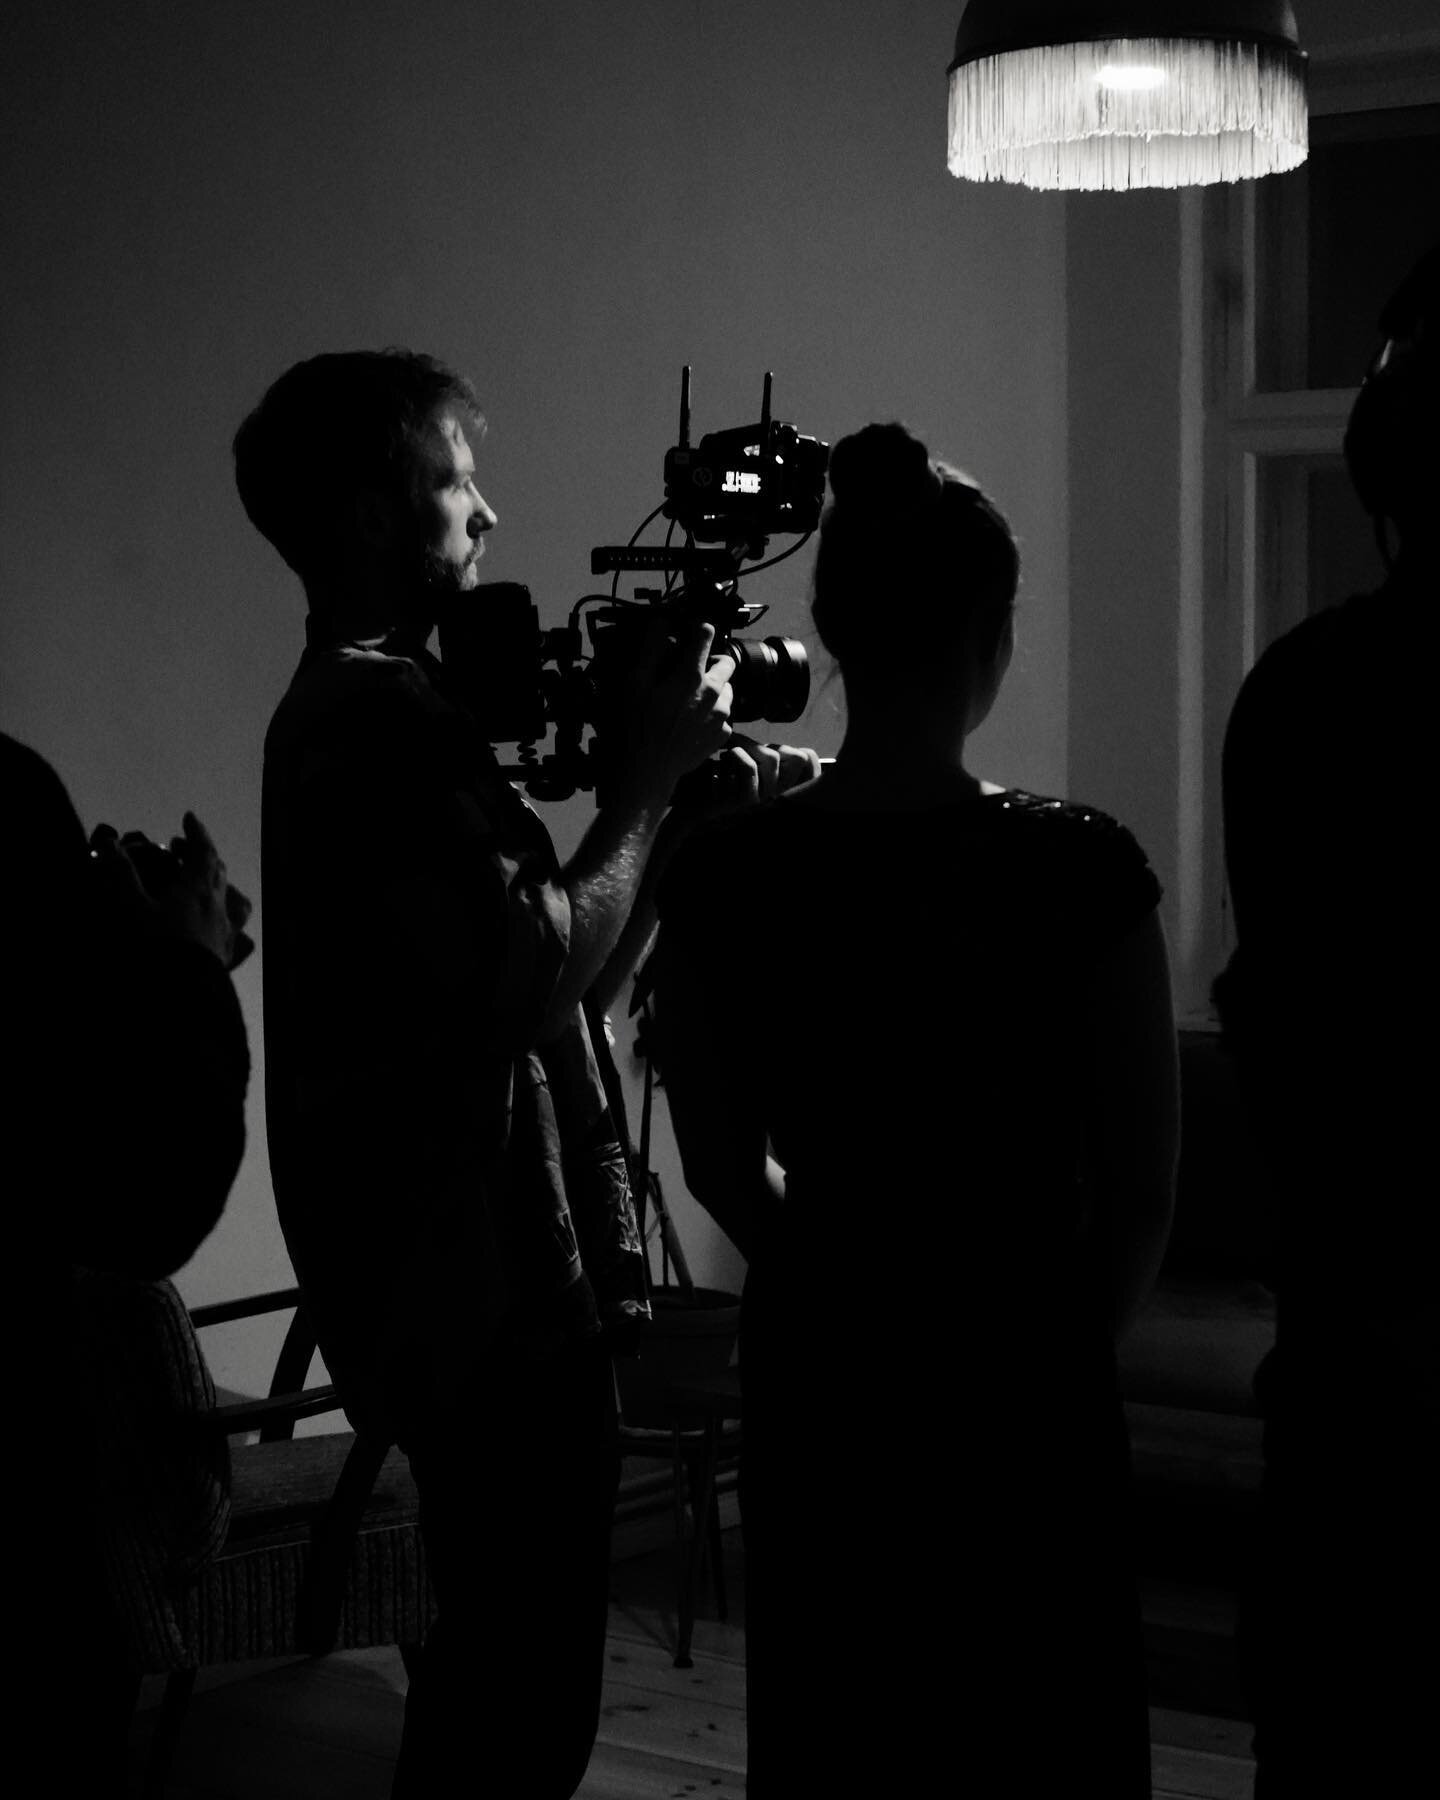 🎥
Director: @johanneswilczek
DoP: @mattis_schulte

#behindthescenes #shortfilm #berlin #blackandwhite #film #setphotography #onset